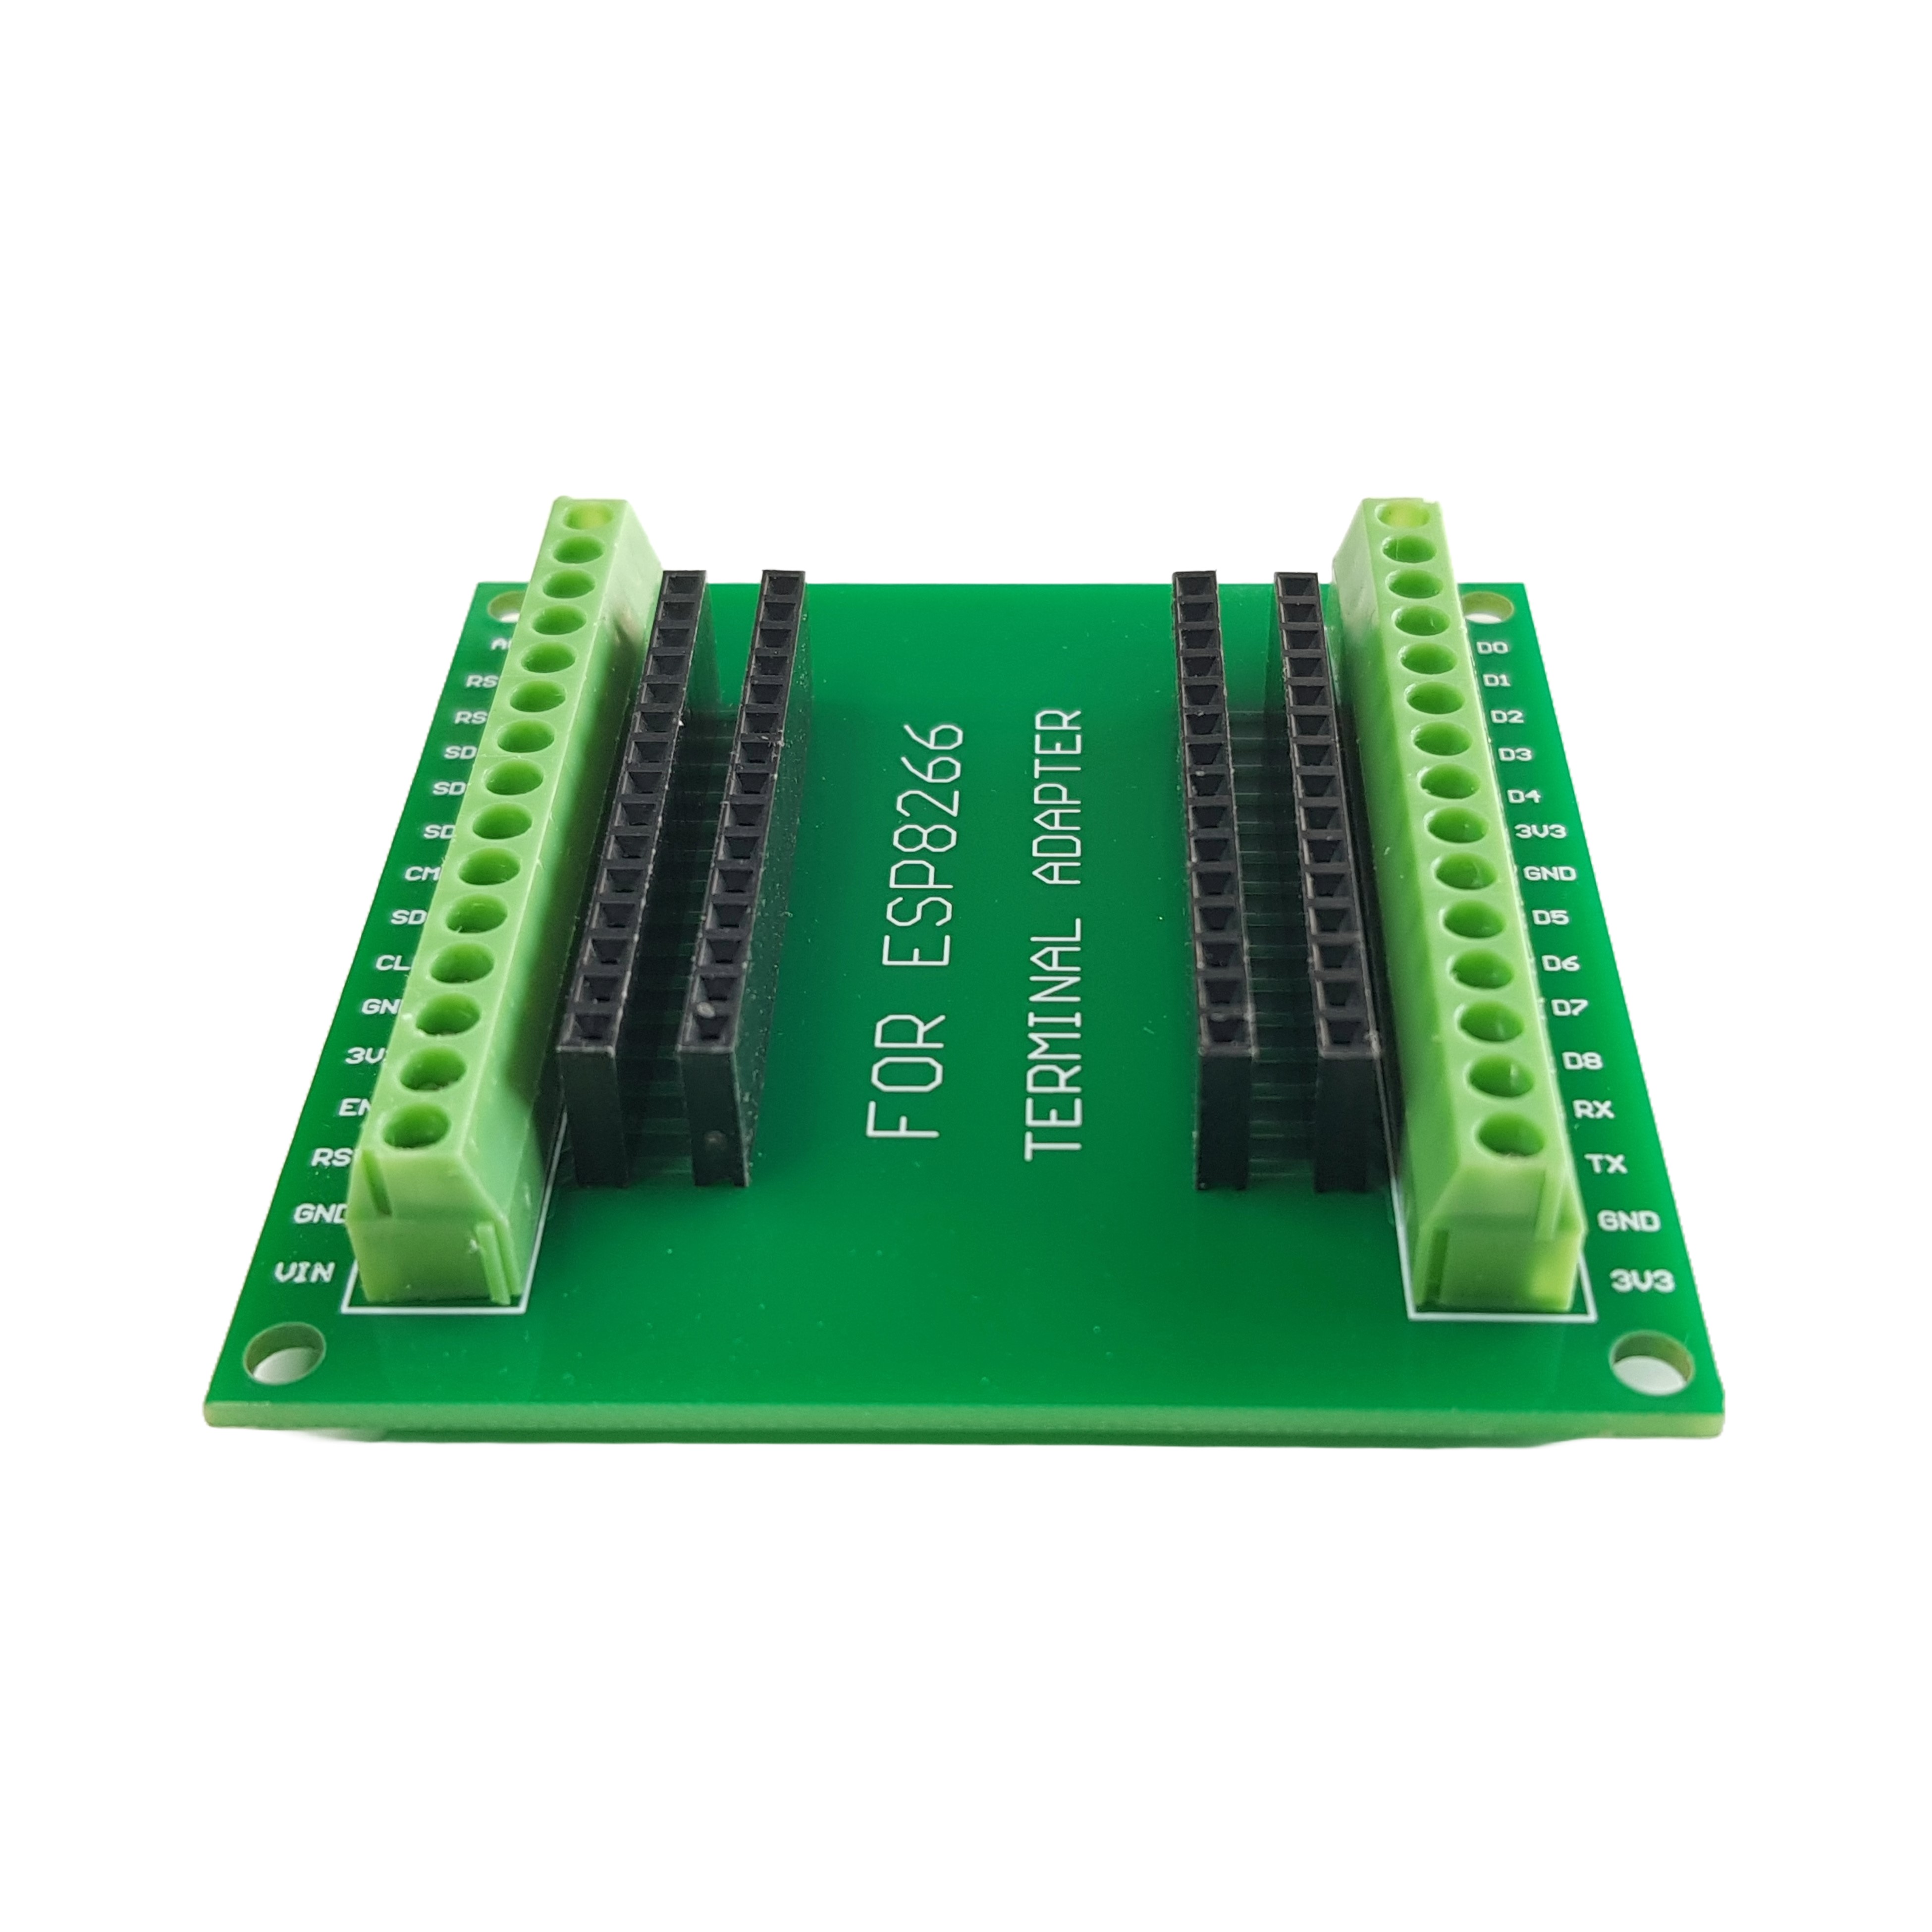 Screw Terminal Adapter for ESP8266 NodeMCU